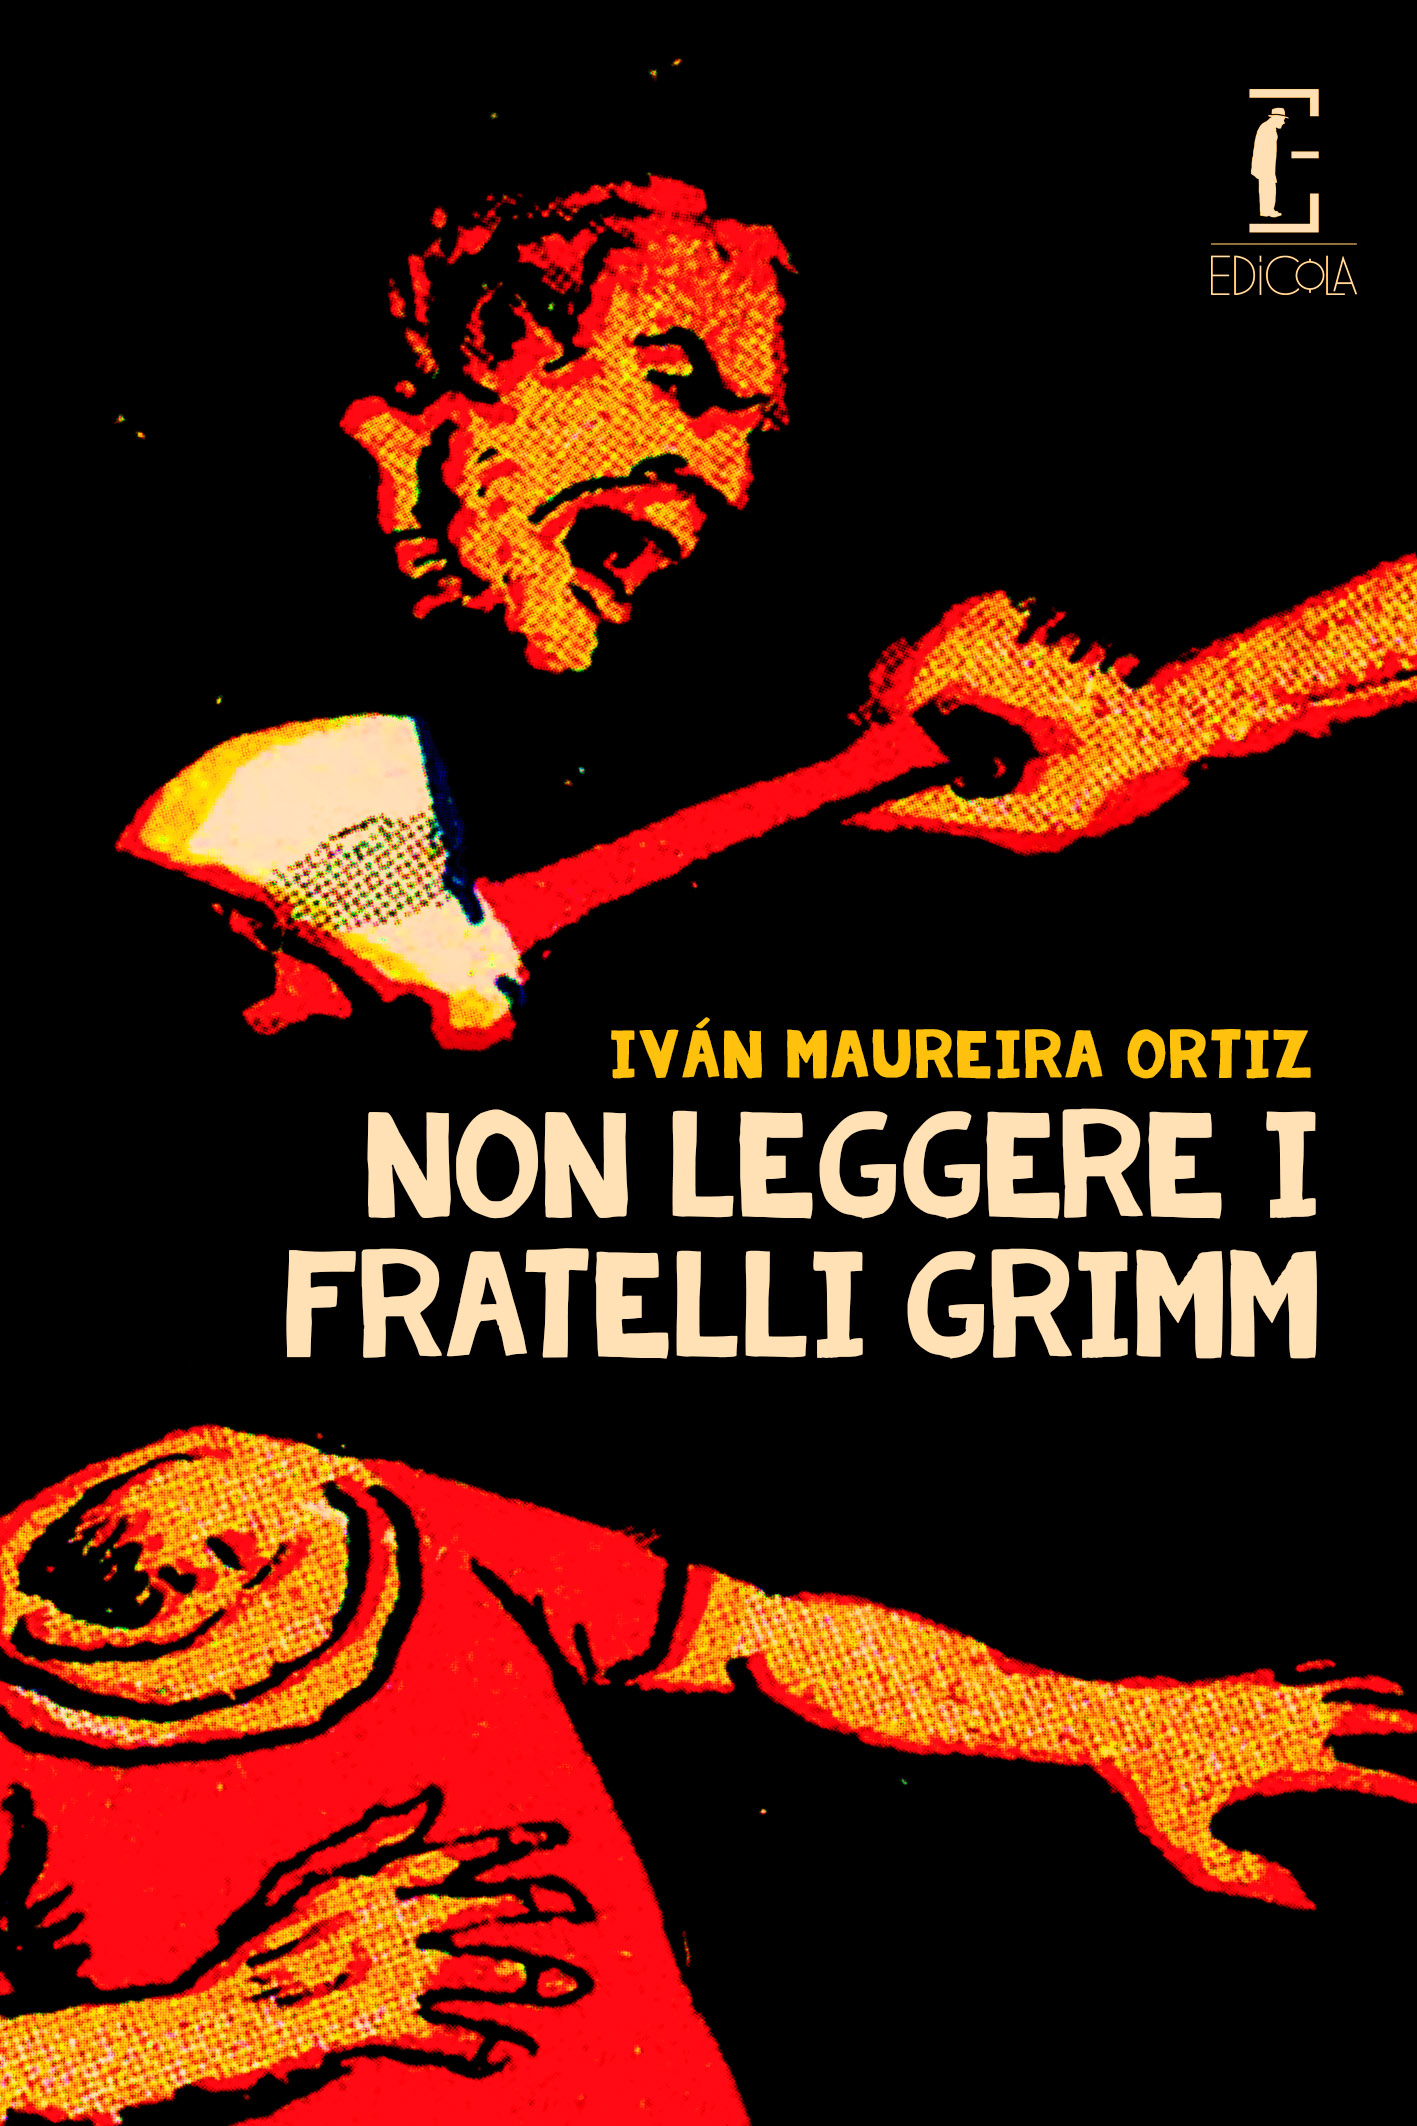 Non leggere i fratelli Grimm - Edicola Ediciones